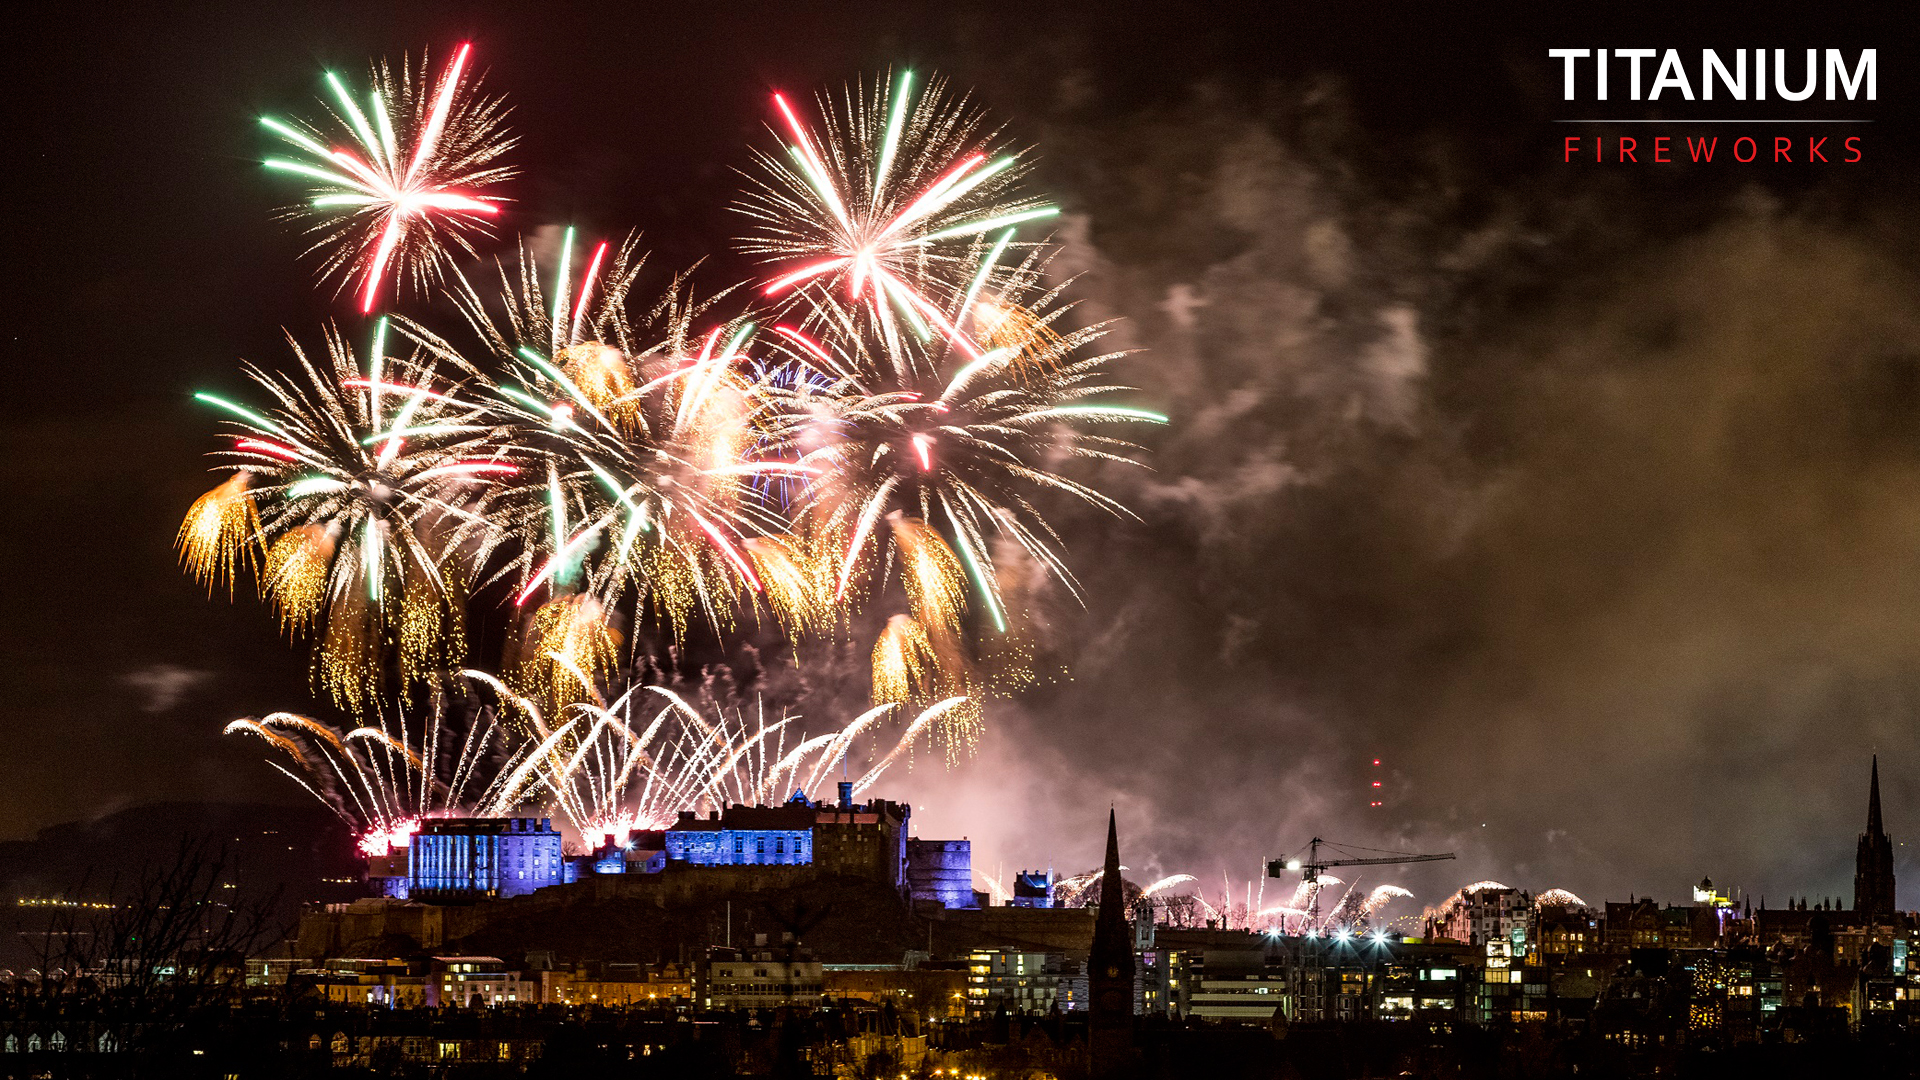 edinburgh, hogmanay, torchlight procession, scotland, fireworks, new year's eve, display, professional, titanium fireworks